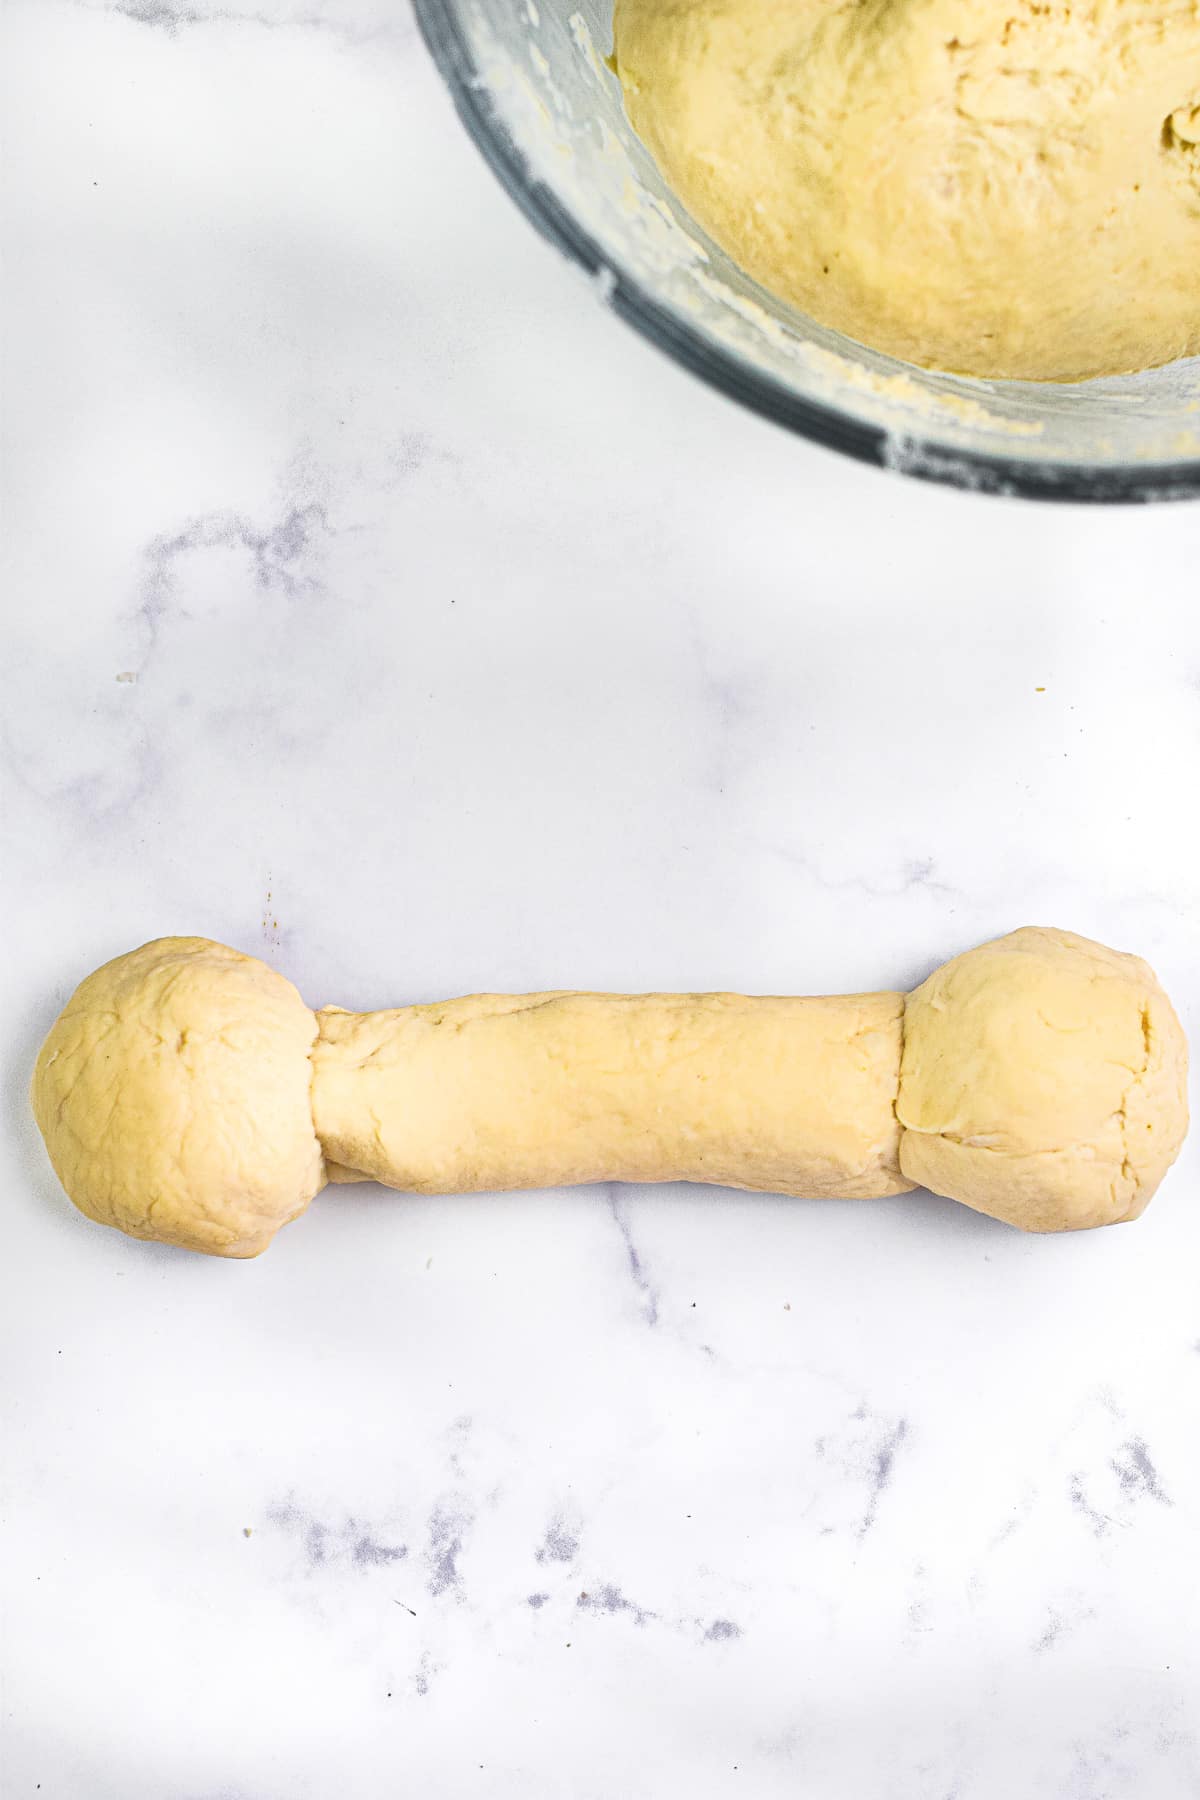 A long piece of dough with a dough ball on each end on a counter.